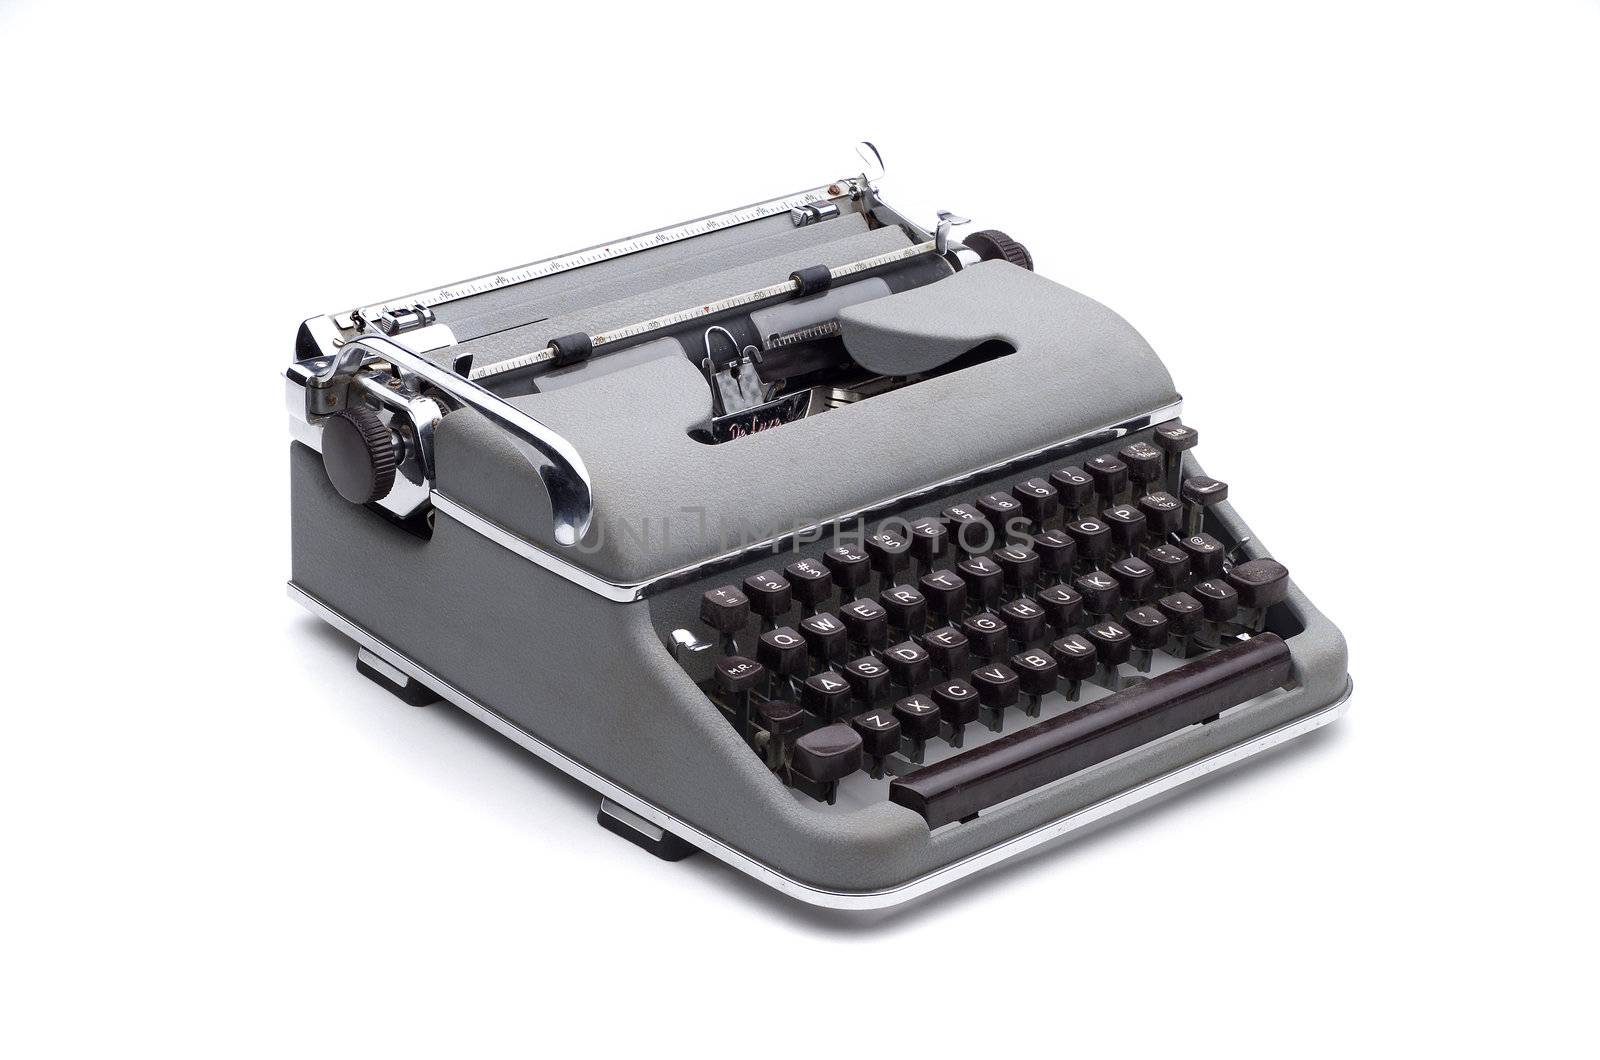 Portatble typewriter by f/2sumicron